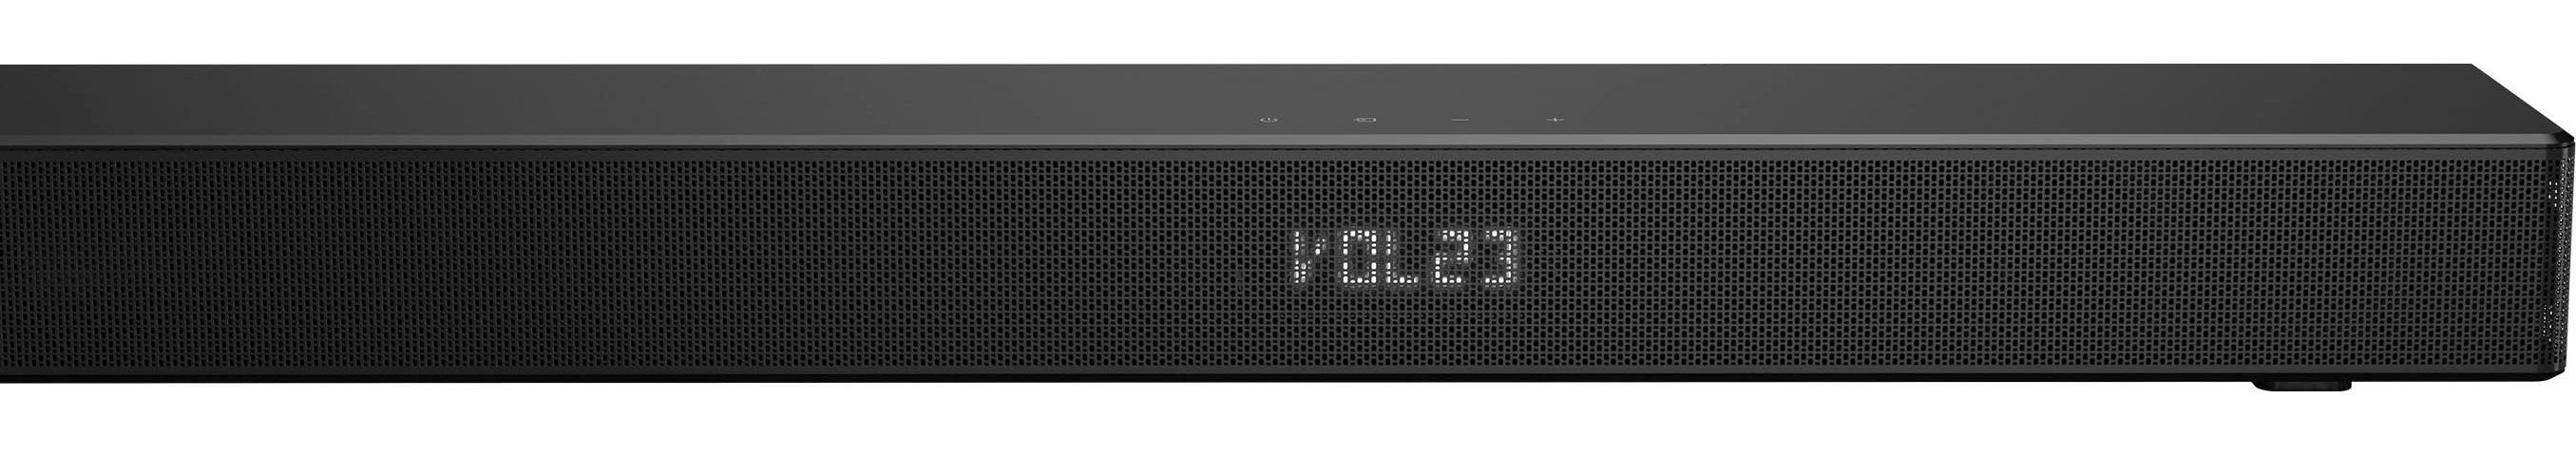 Hisense Soundbar AX2106G 2.1 Kanal mit integrierten Subwoofer